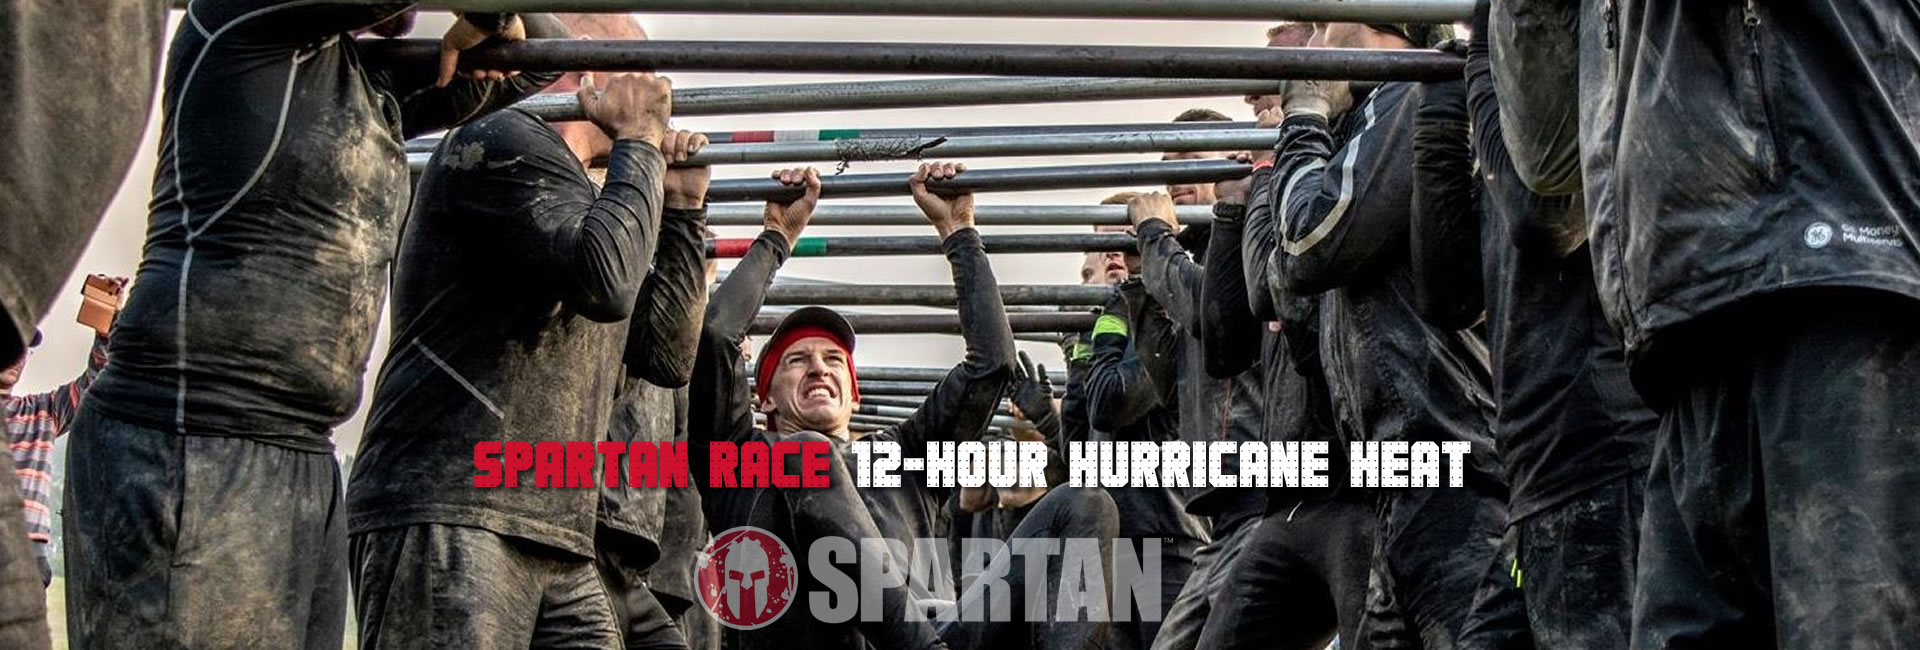 Spartan Race 12-Hour Hurricane Heat in Fort Pierce